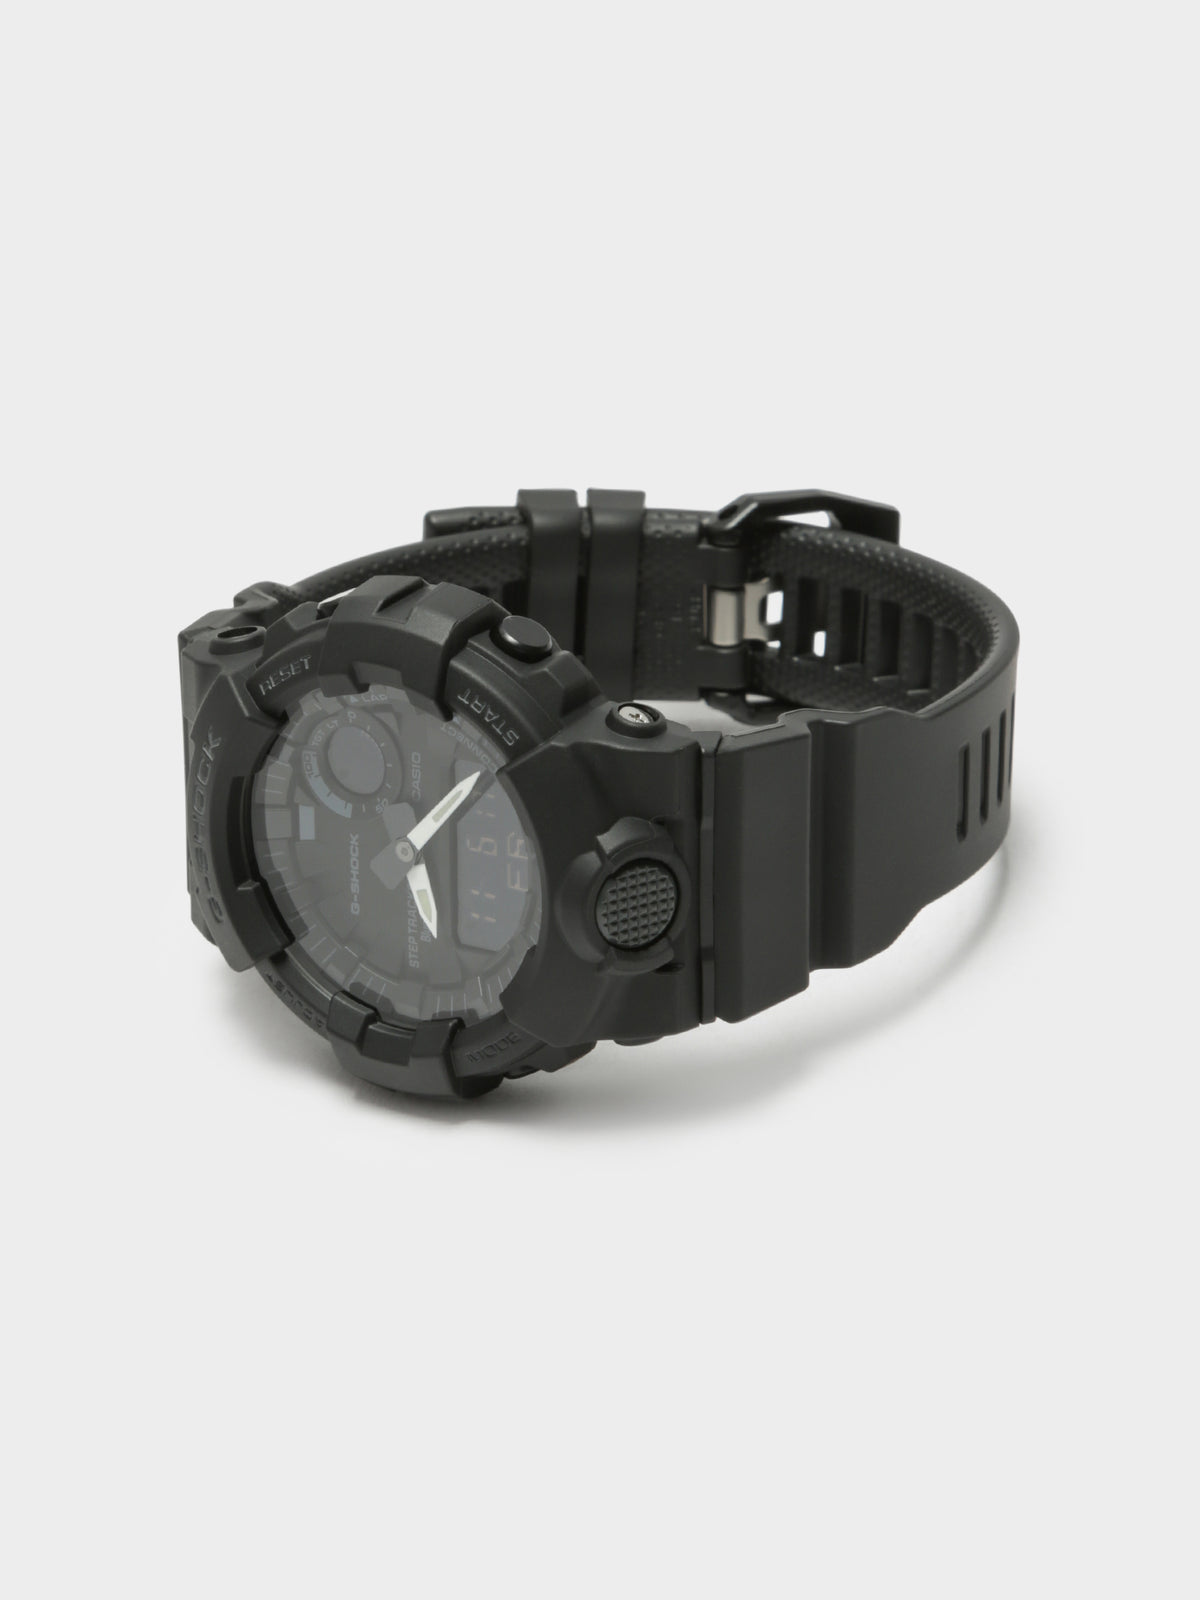 GBA800-1A Bluetooth Step Tracker Watch in Black